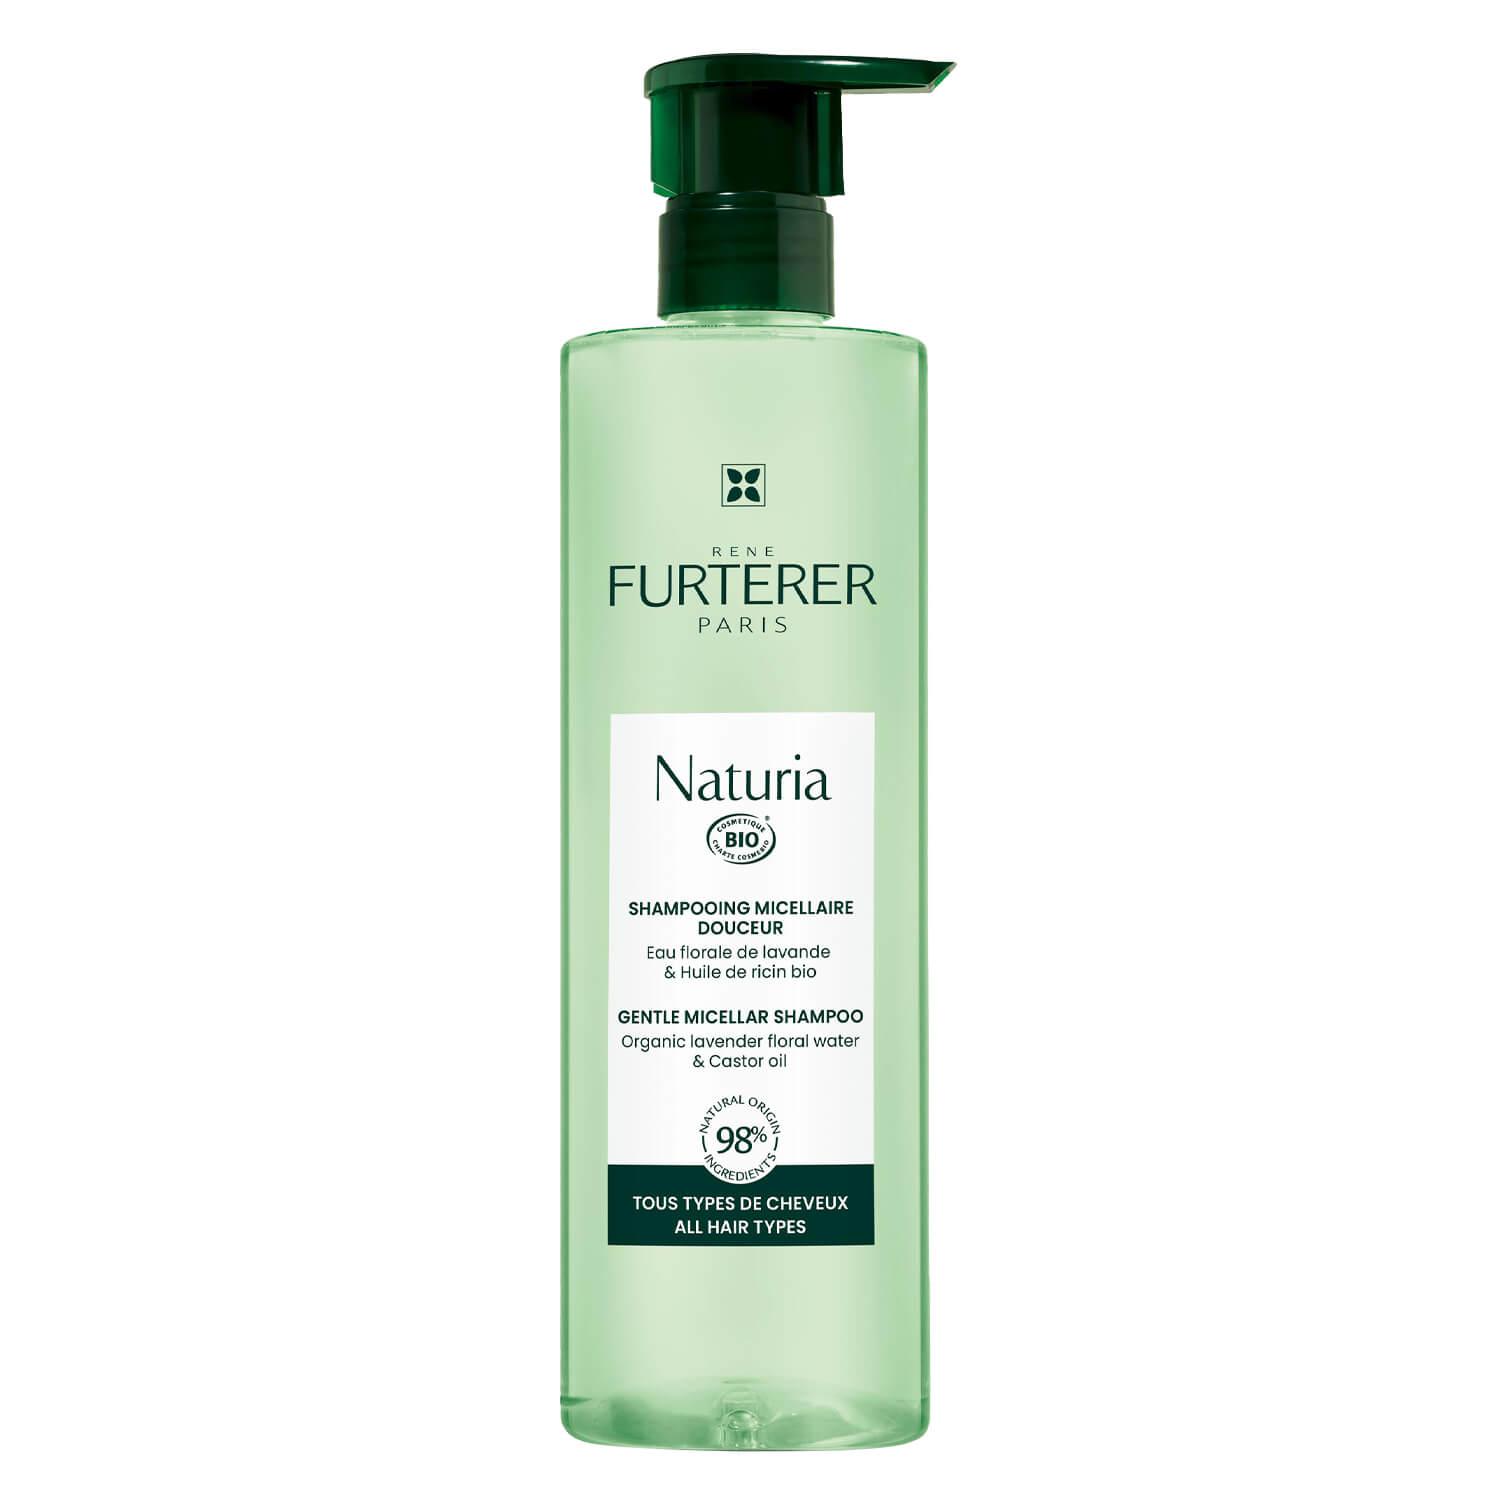 Naturia - Gentle Micellar Shampoo